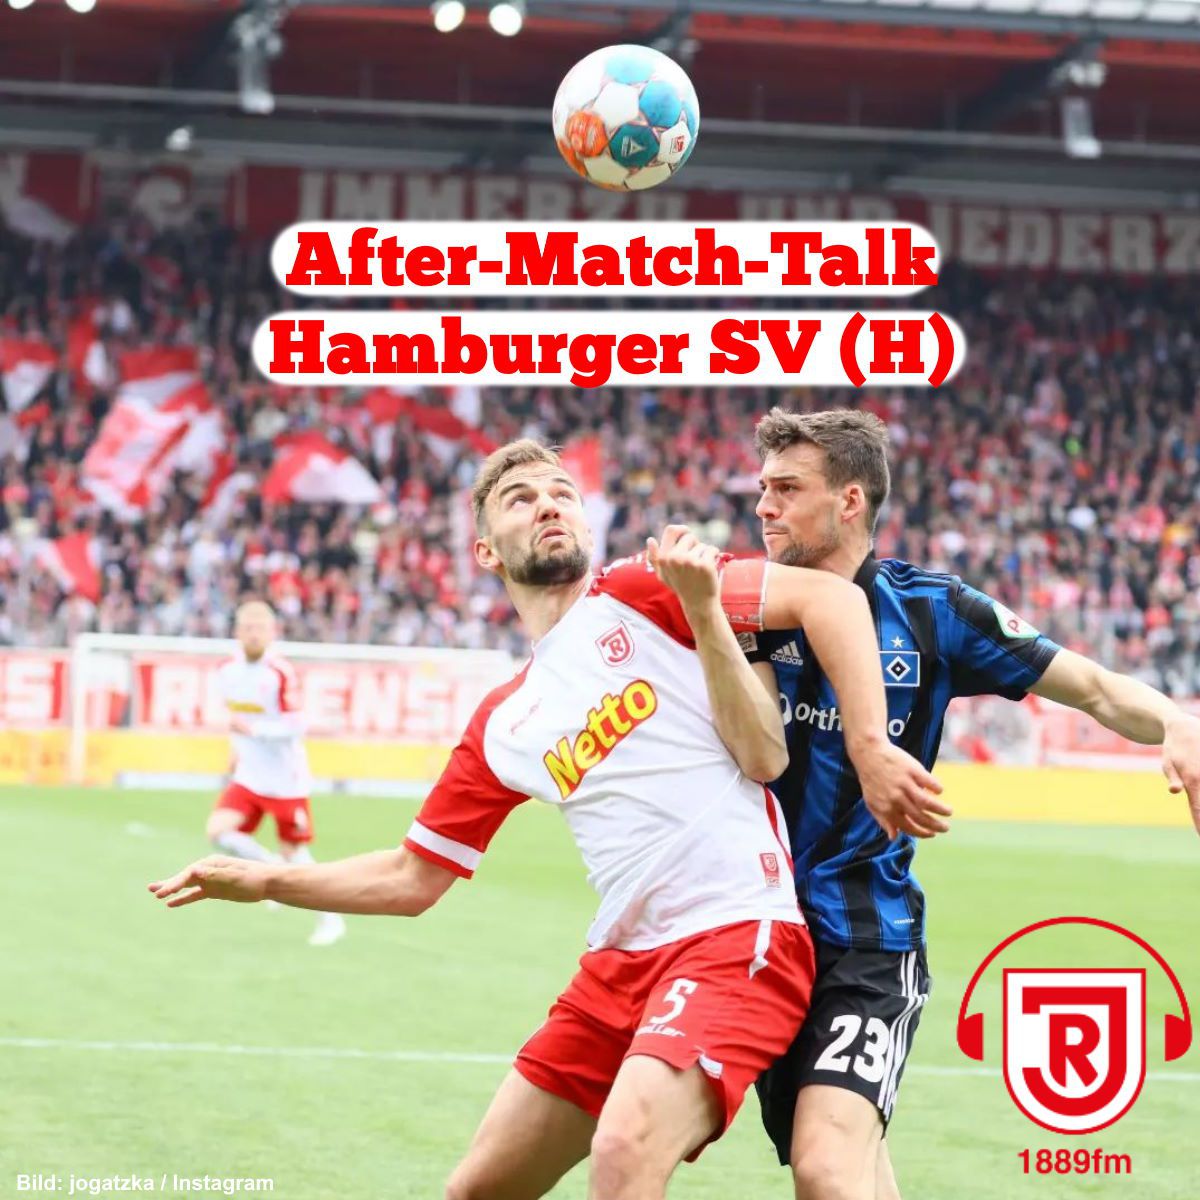 After-Match-Talk: SSV Jahn Regensburg - Hamburger SV - 1889fm